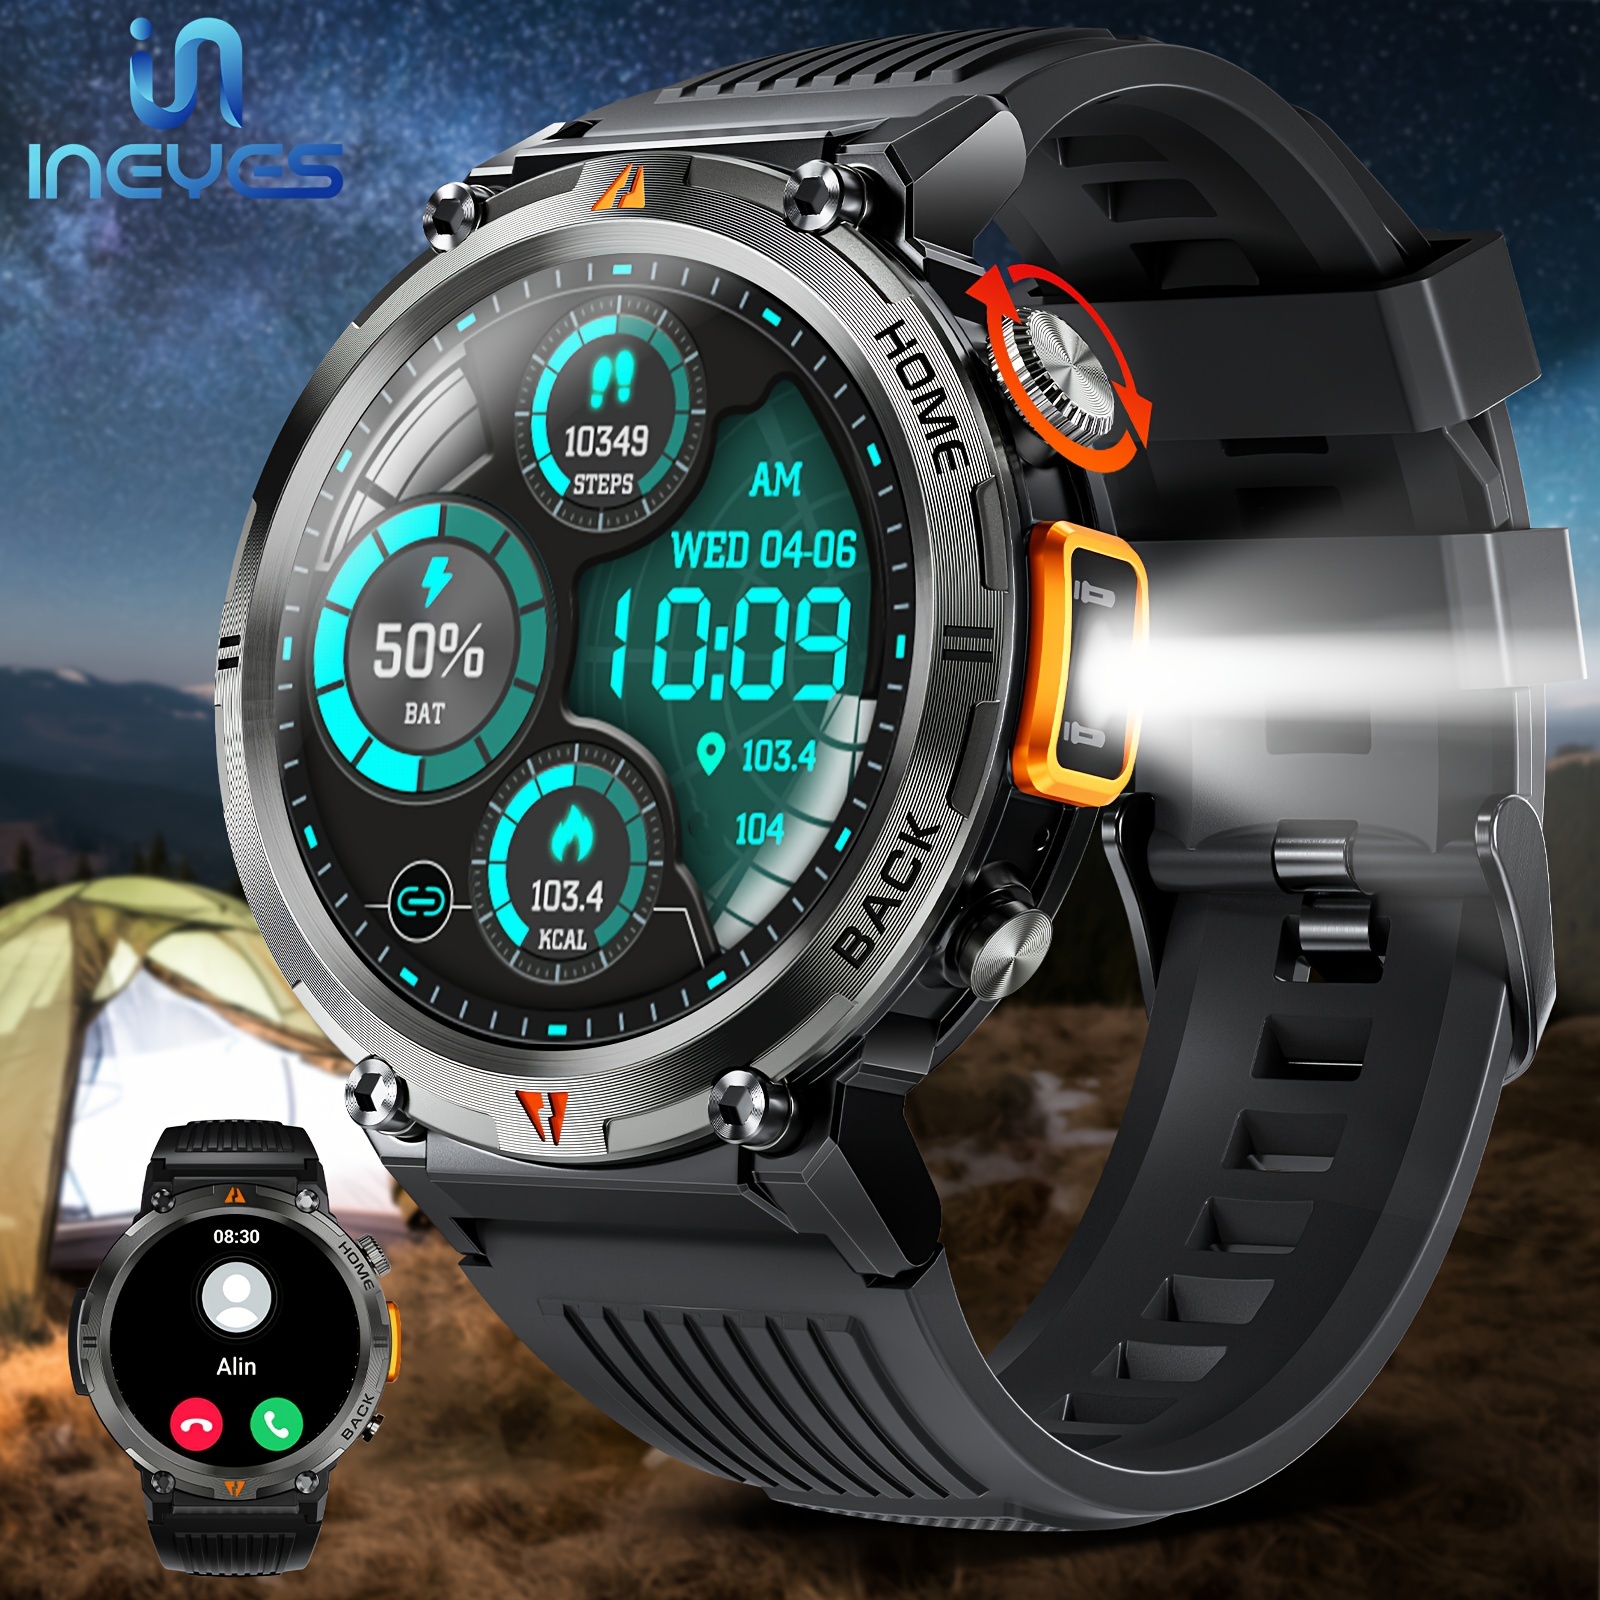 eigiis smartwatch ke3 with With Flashlight – vwar